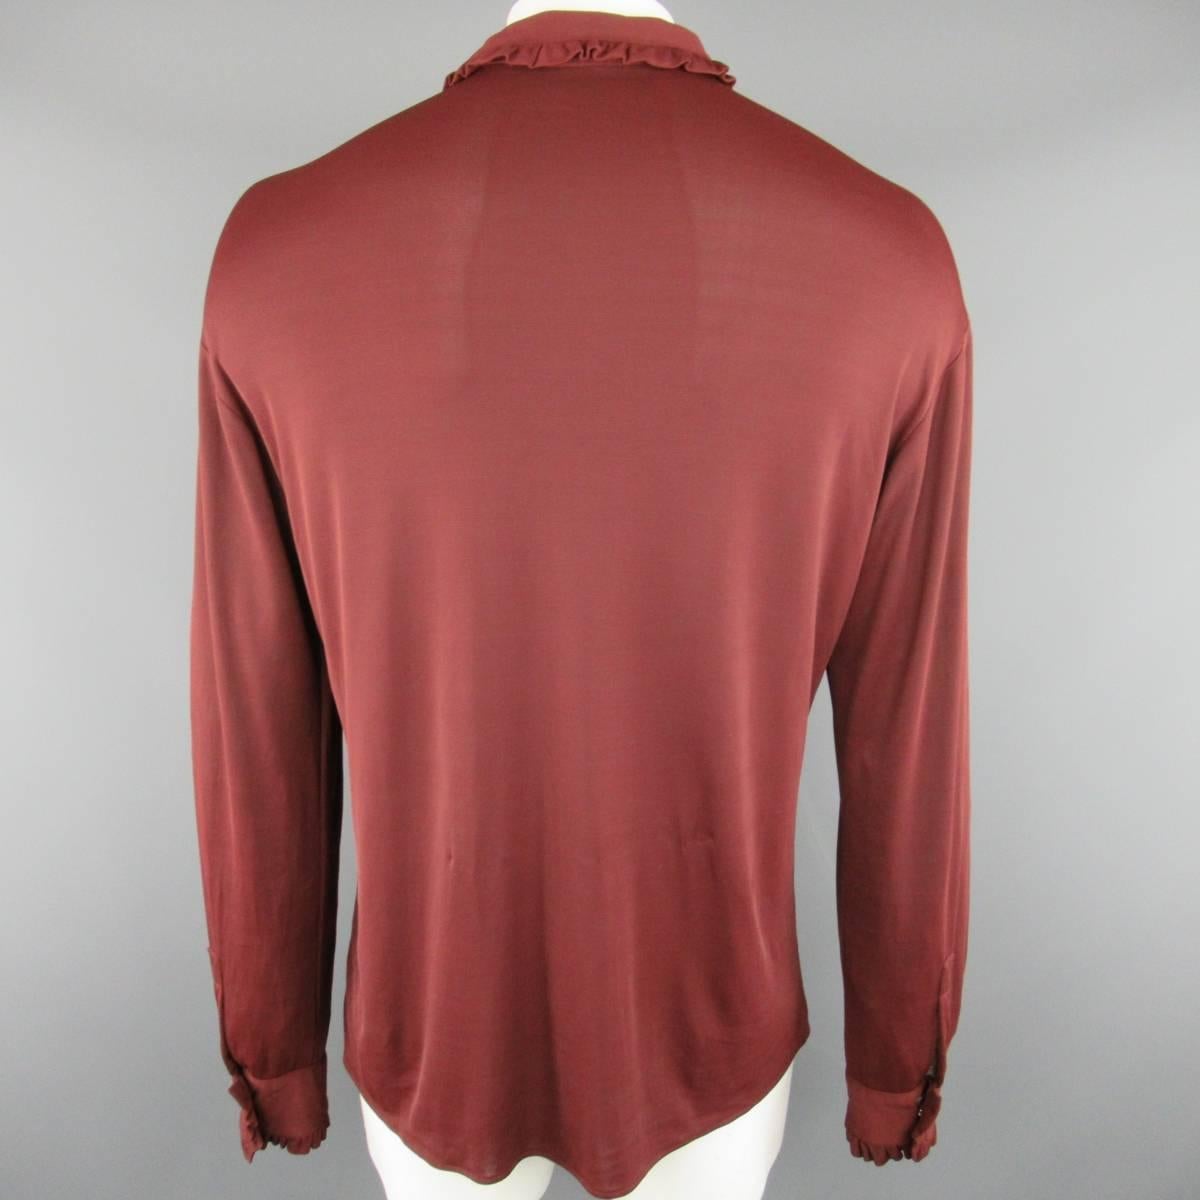 Women's or Men's VERSUS by GIANNI VERSACE Size L Maroon Polimide Ruffle Trim Long Sleeve Shirt